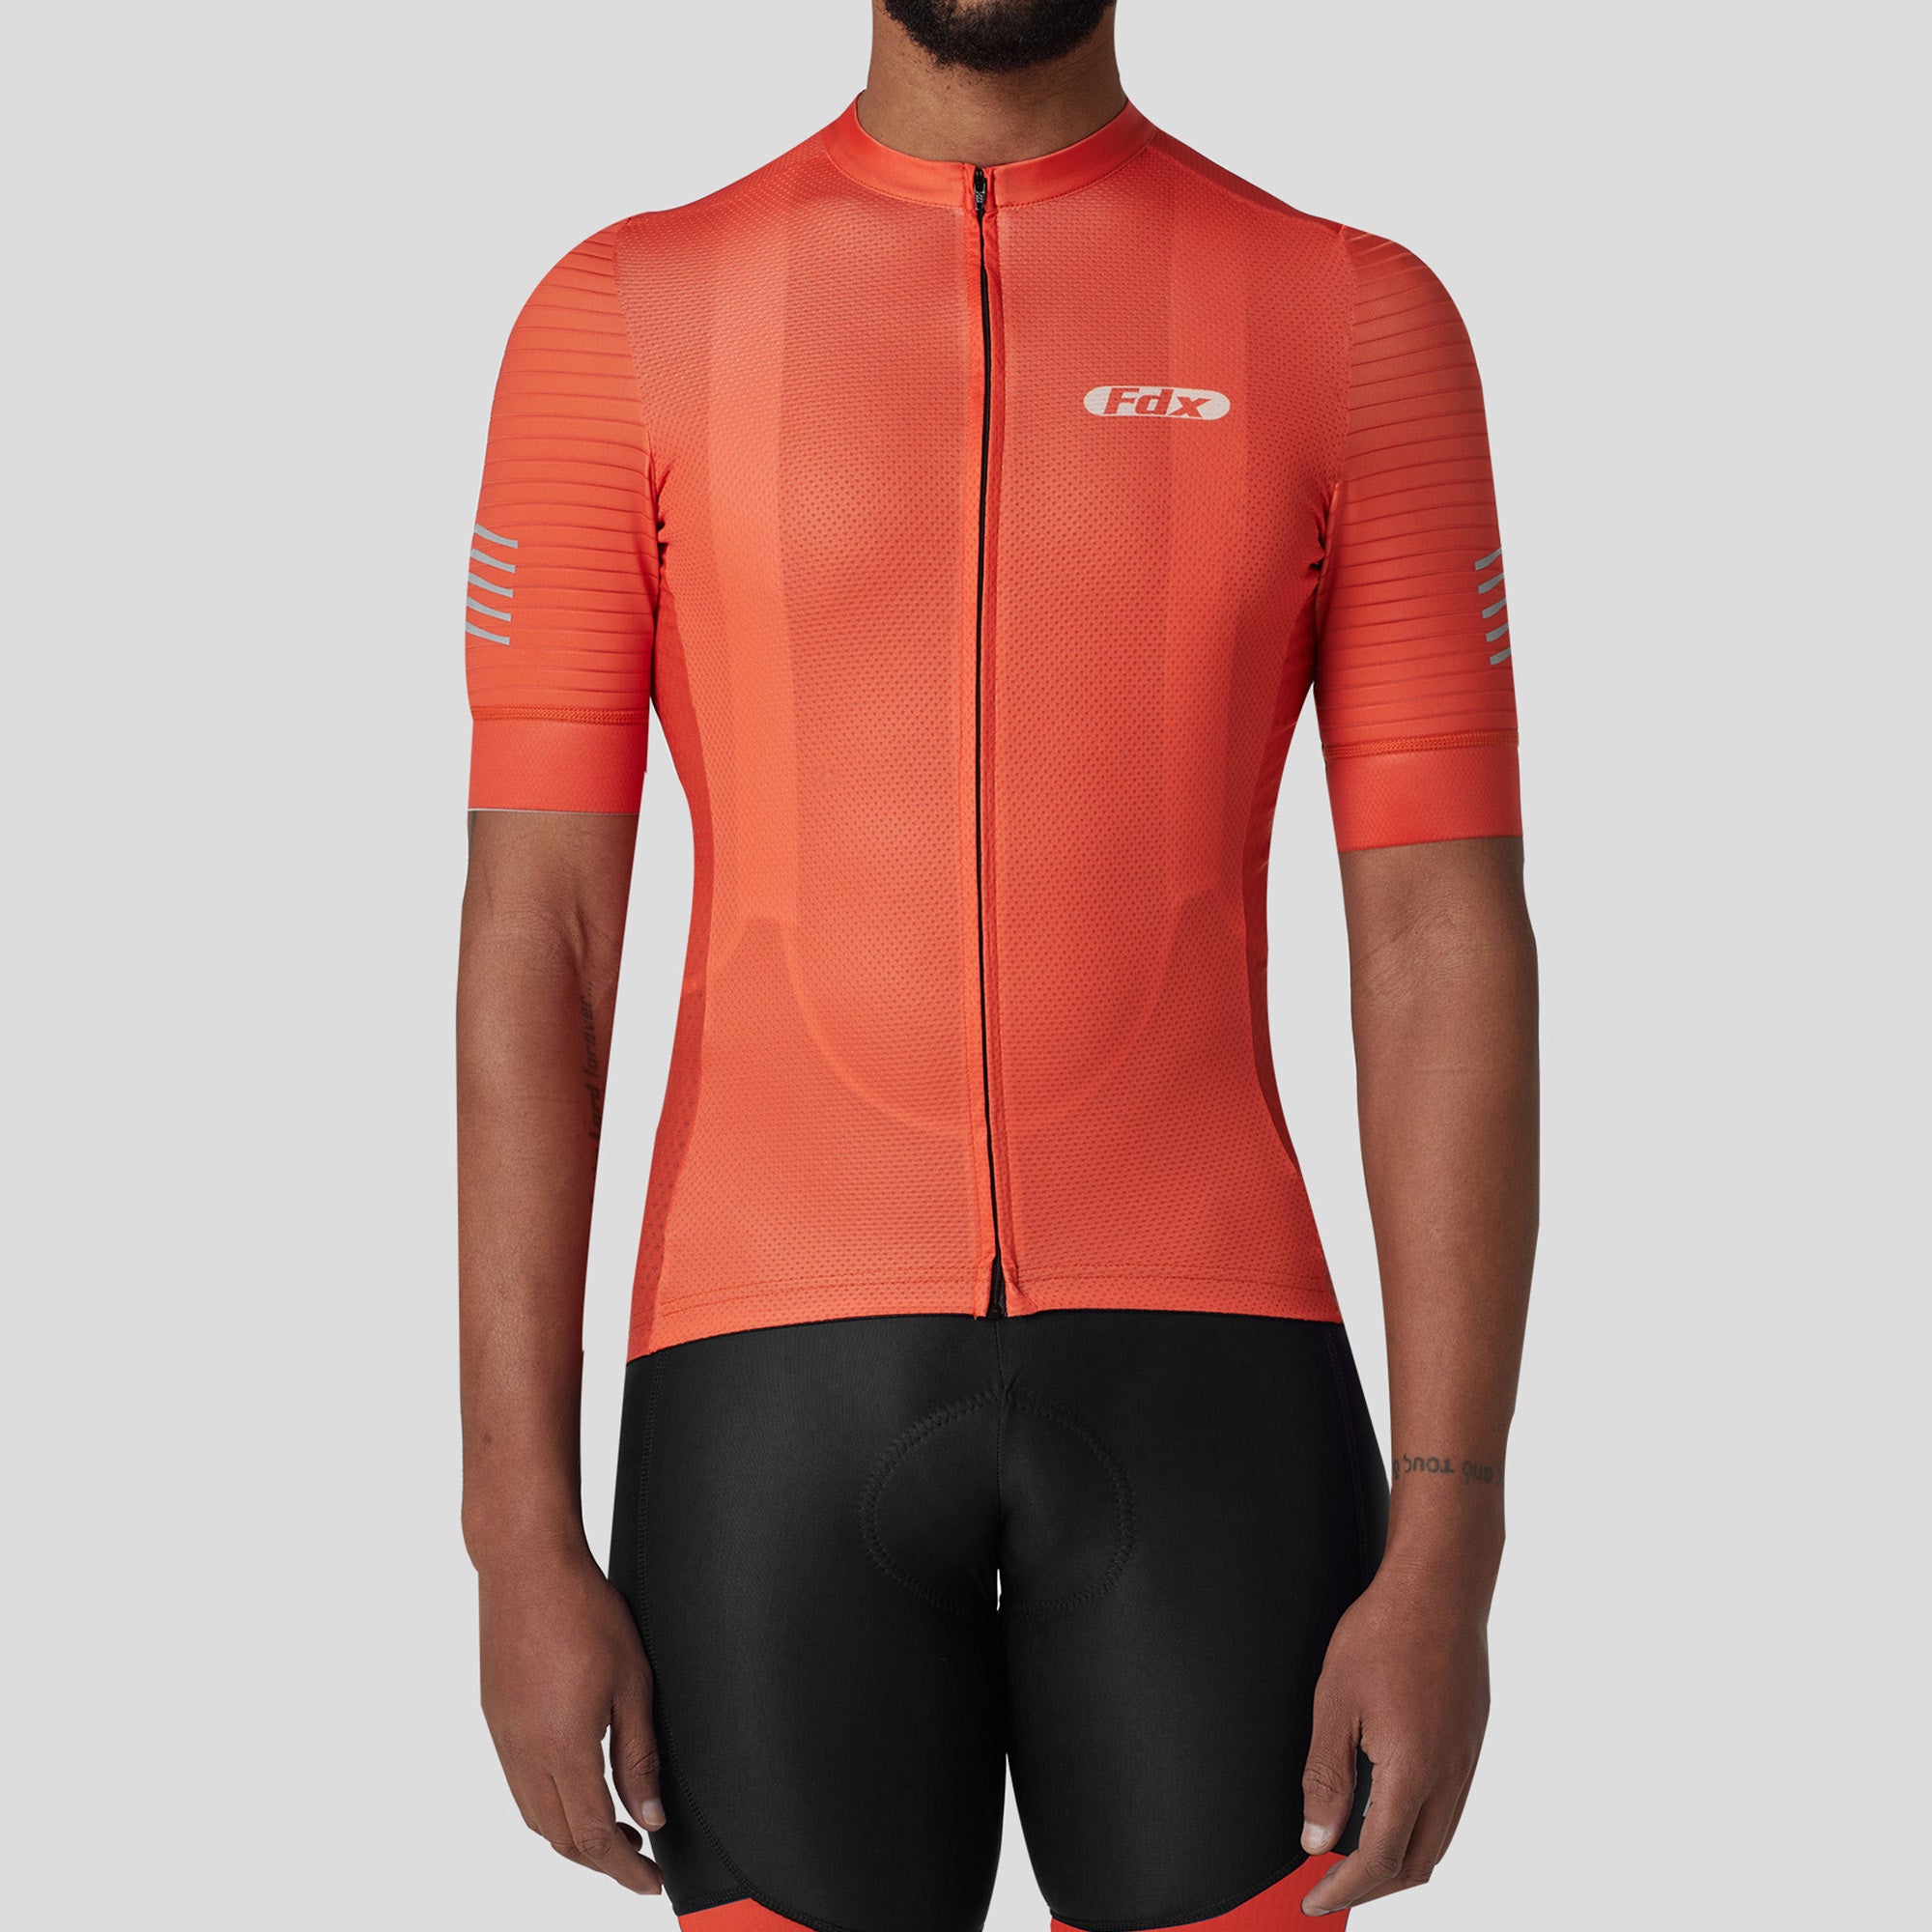 Fdx Mens Orange Short Sleeve Cycling Jersey for Summer Best Road Bike Wear Top Light Weight, Full Zipper, Pockets & Hi-viz Reflectors - Essential